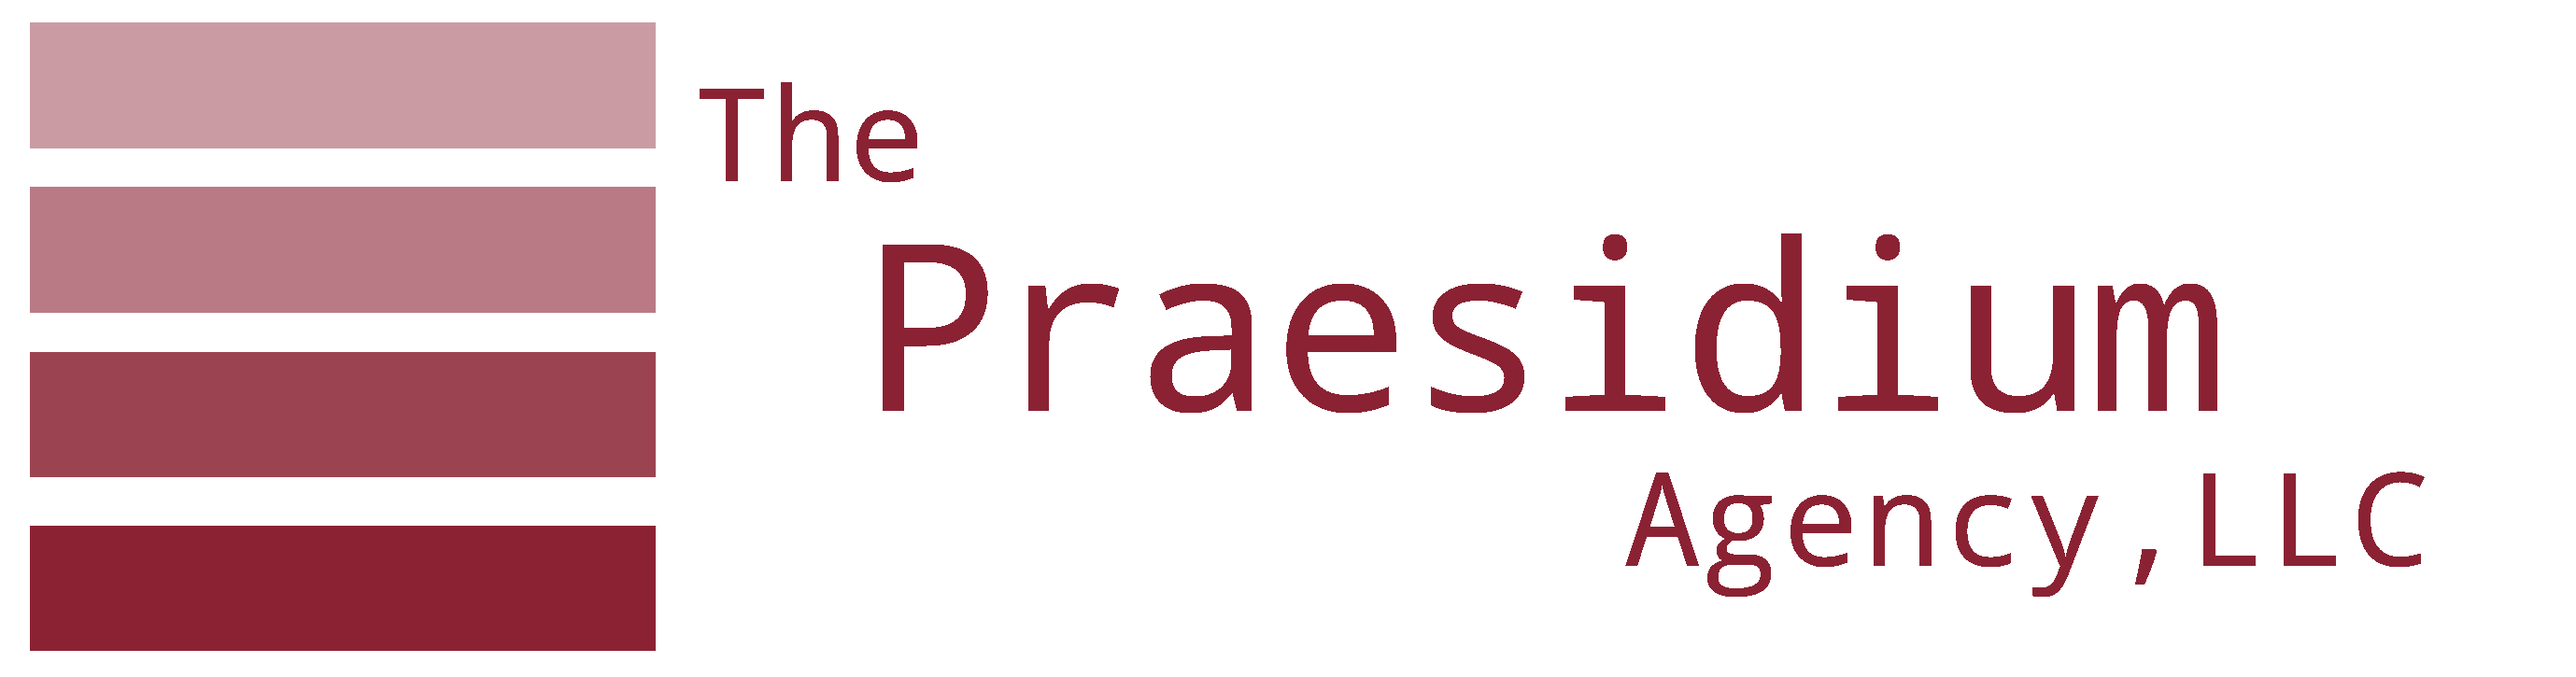 The Praesidium Agency, LLC